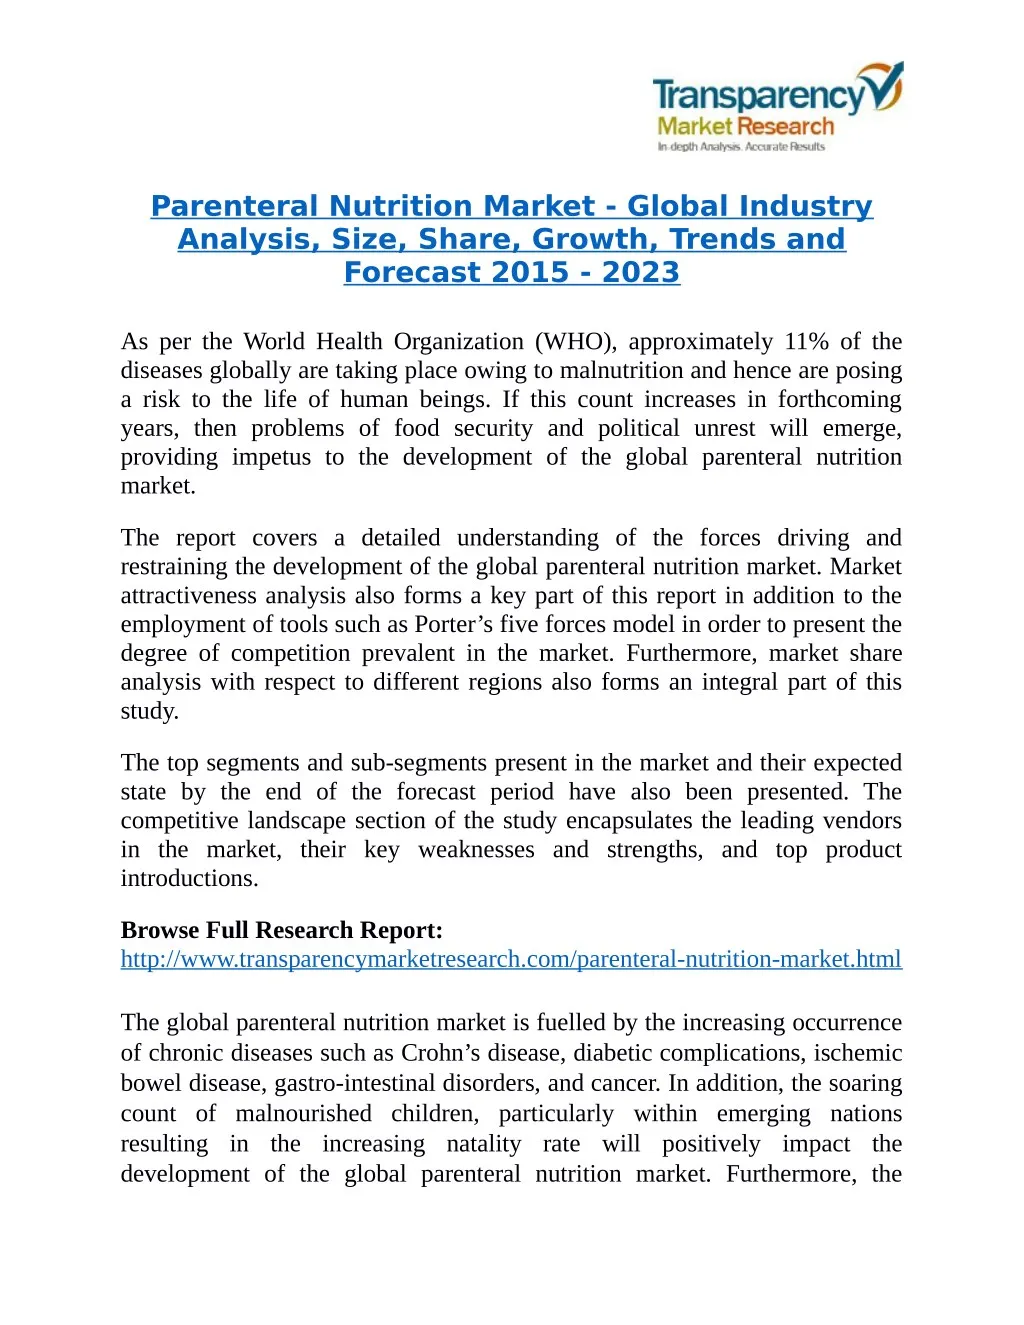 parenteral nutrition market global industry